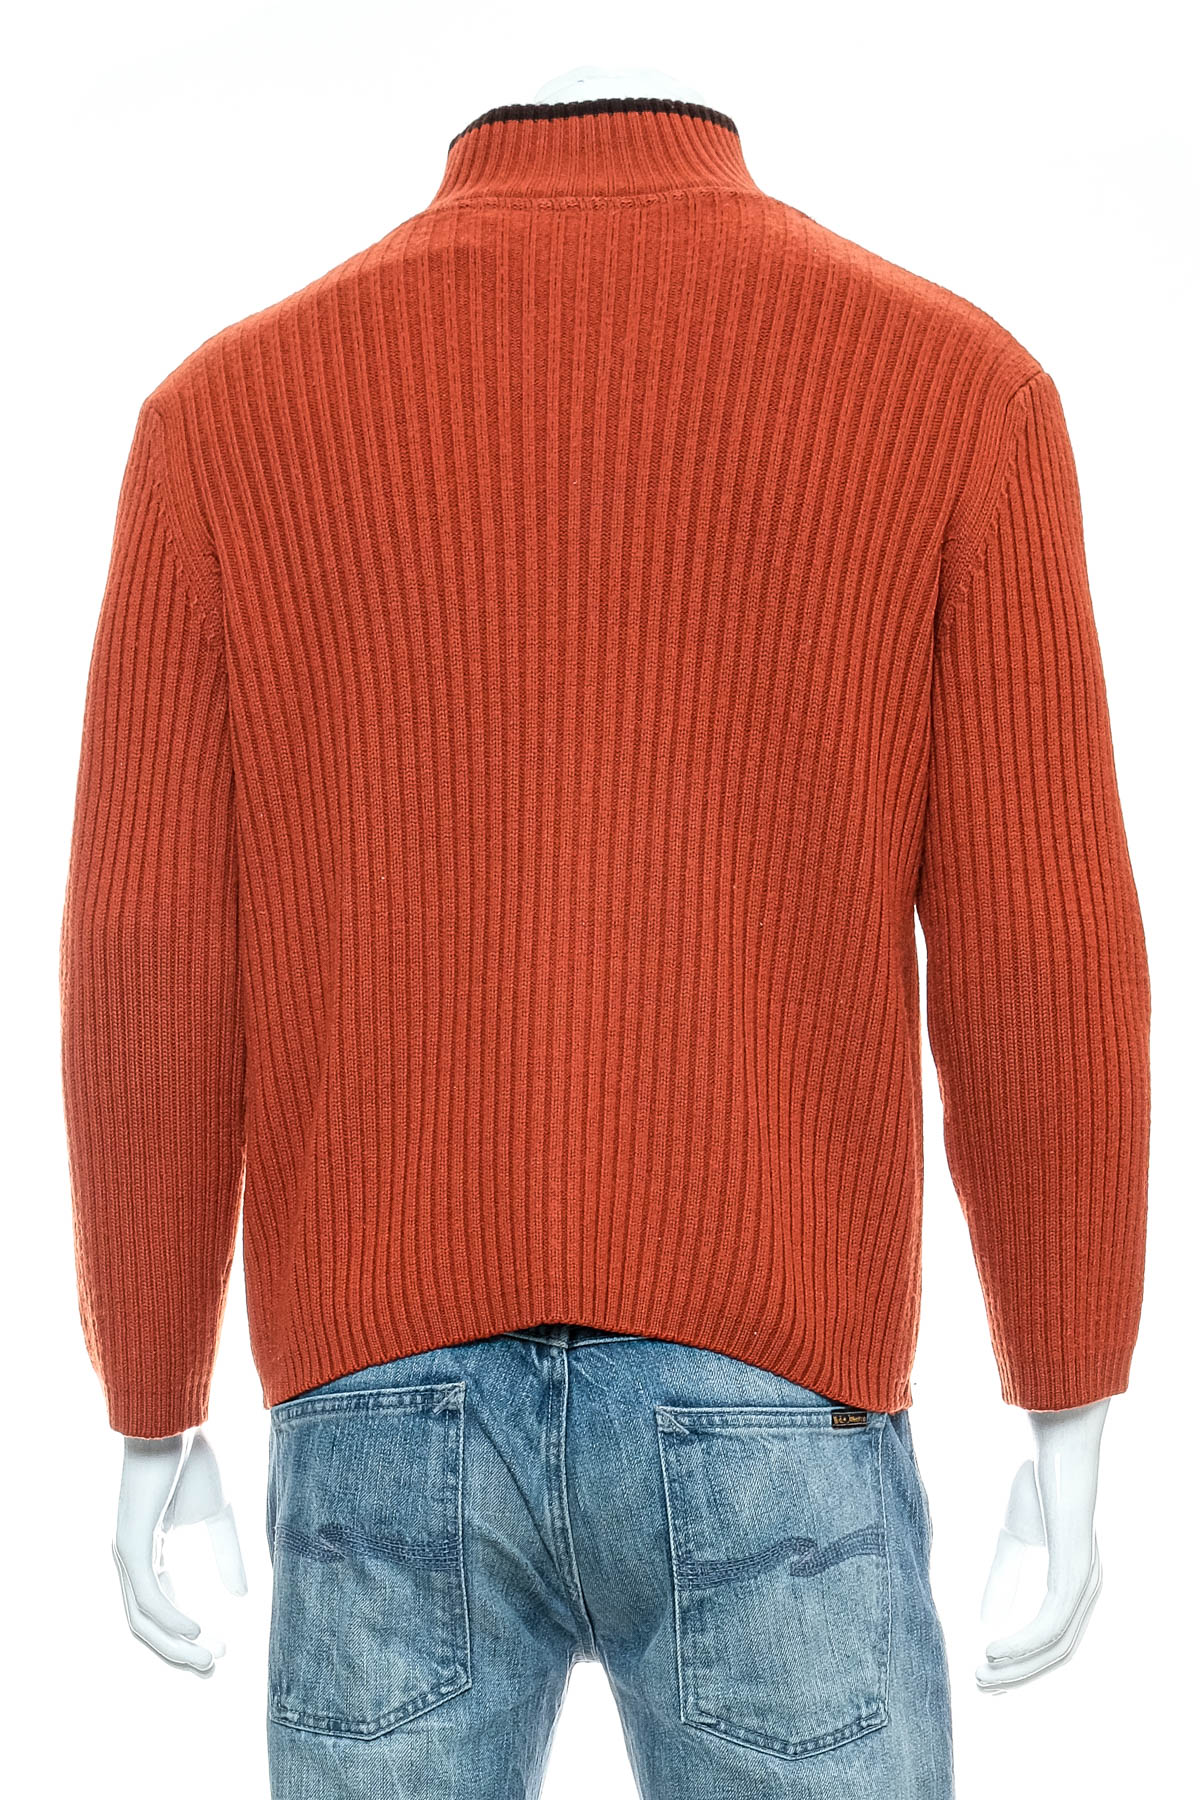 Men's sweater - BRAX - 1